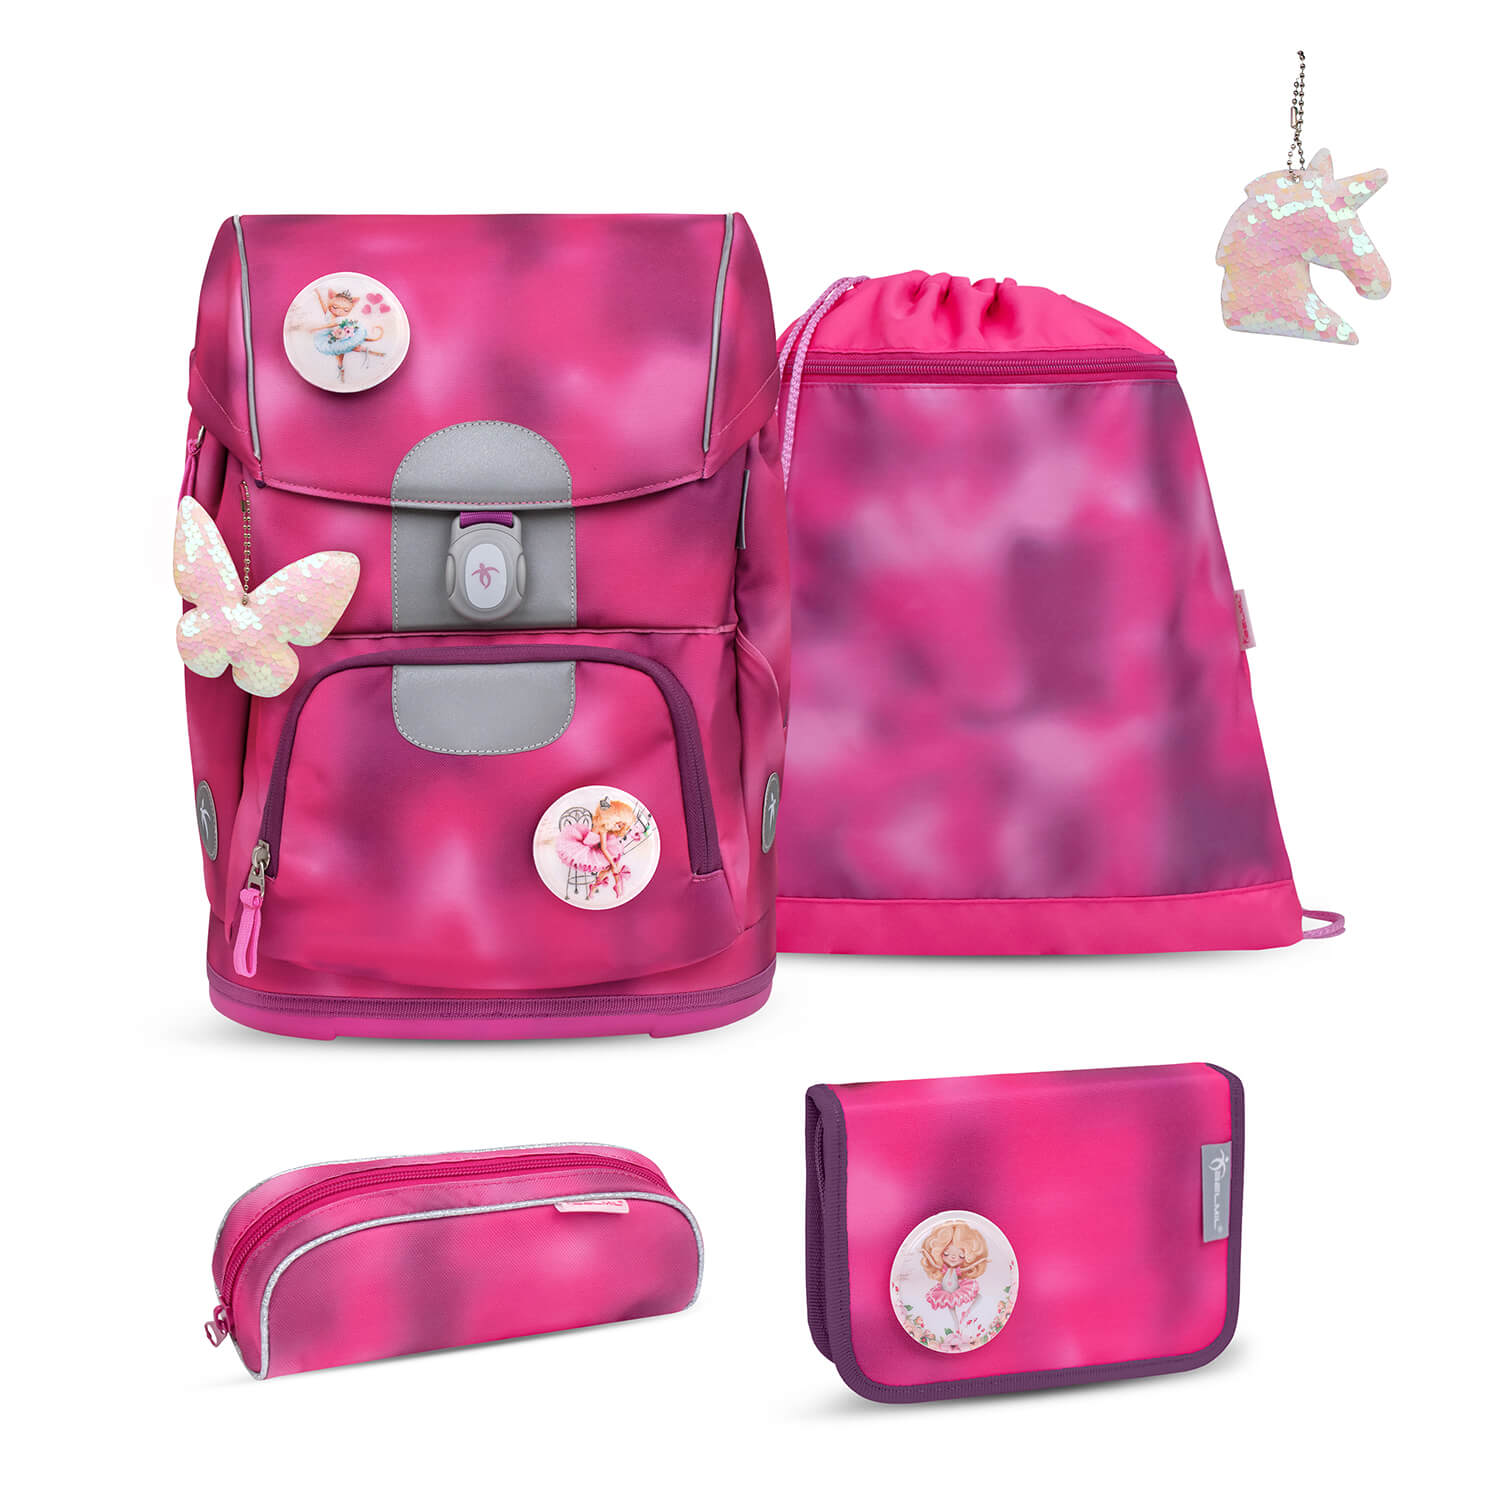 Motion Shiny Pink schoolbag set 6 pcs with GRATIS keychain